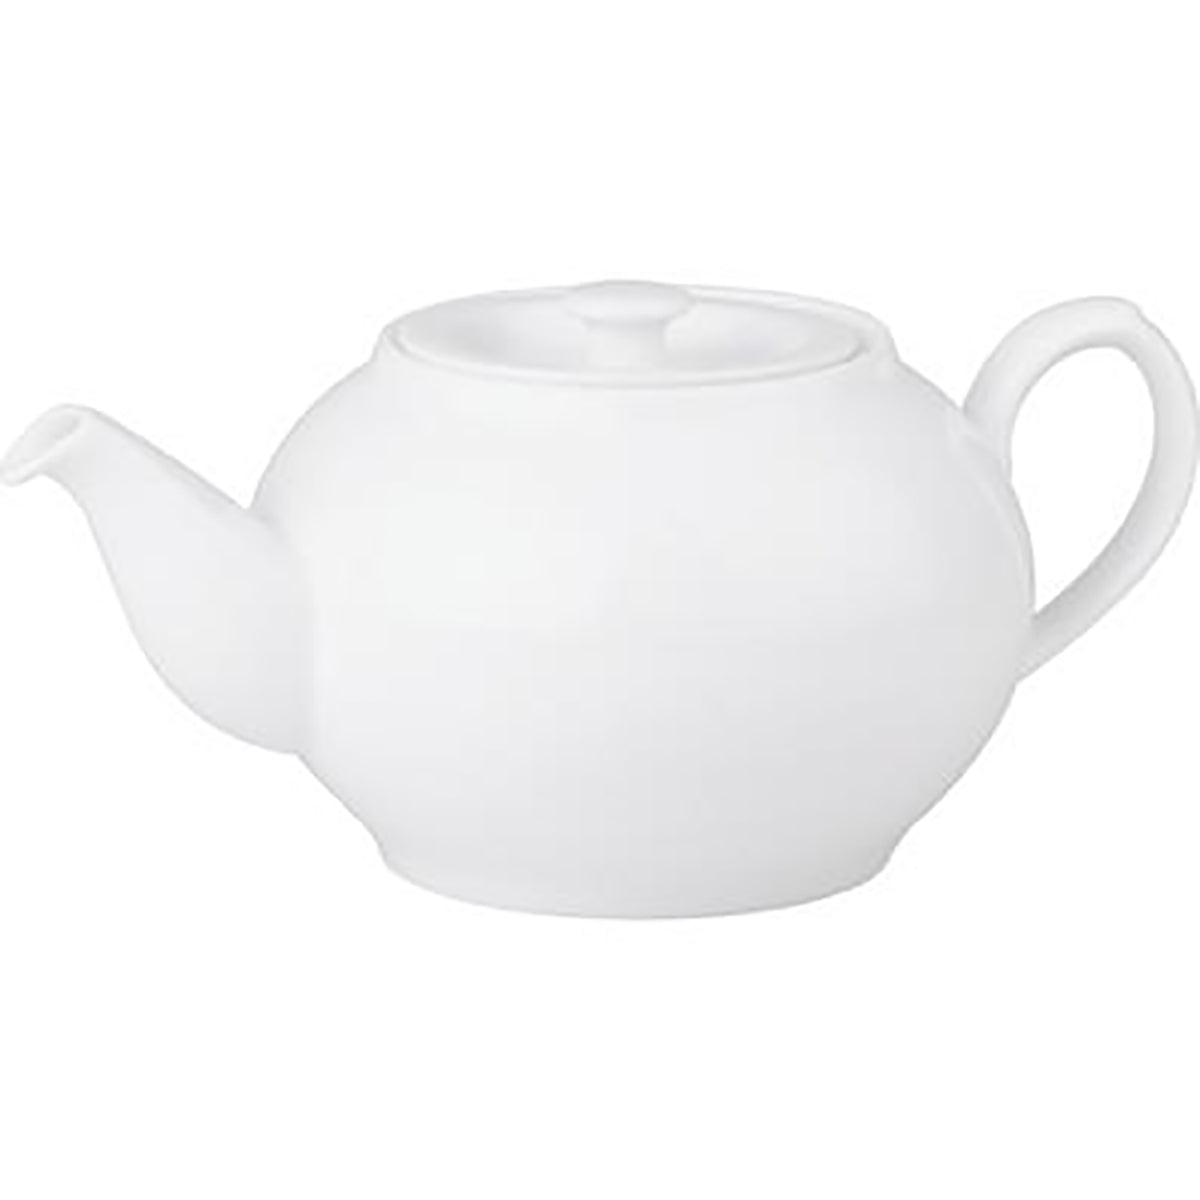 94154 Royal Porcelain Chelsea Chinese Teapot 1Lt (4015) Tomkin Australia Hospitality Supplies